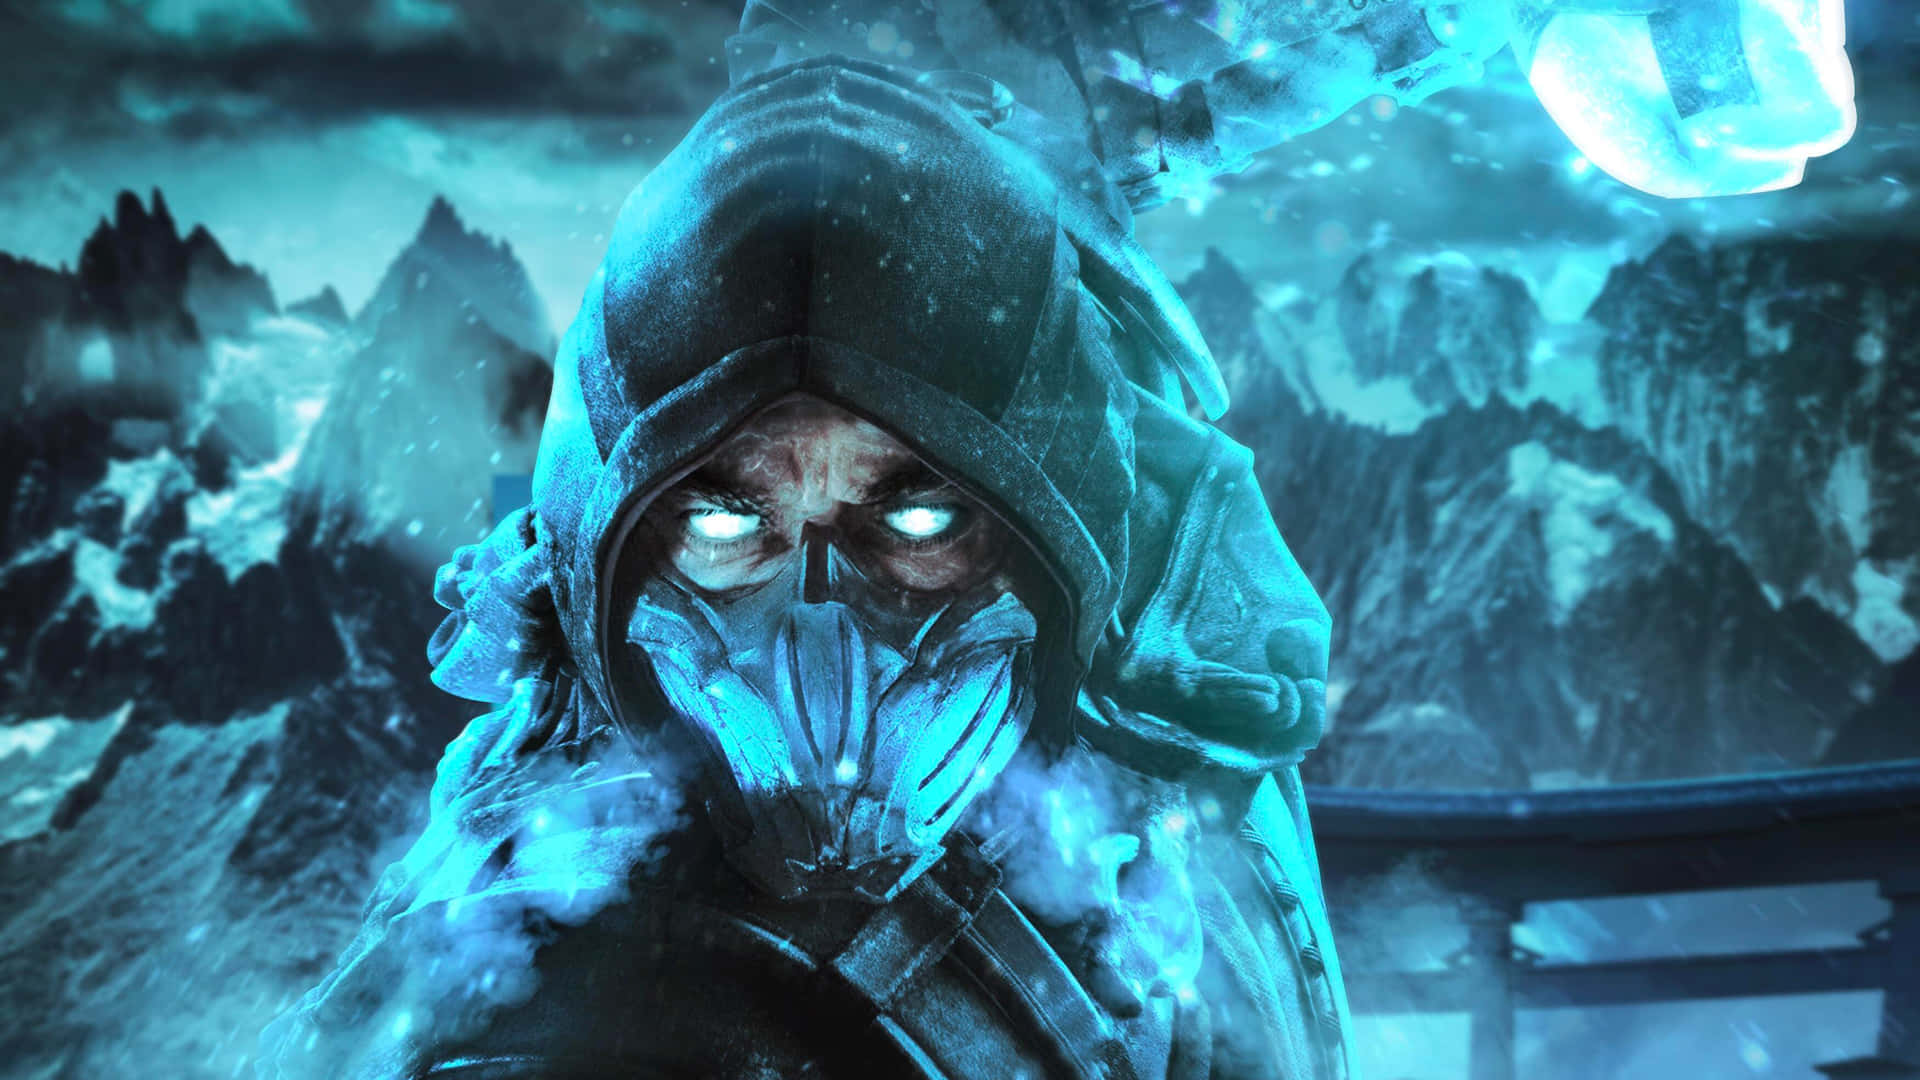 Sub-Zero unleashes his icy powers in Mortal Kombat Wallpaper